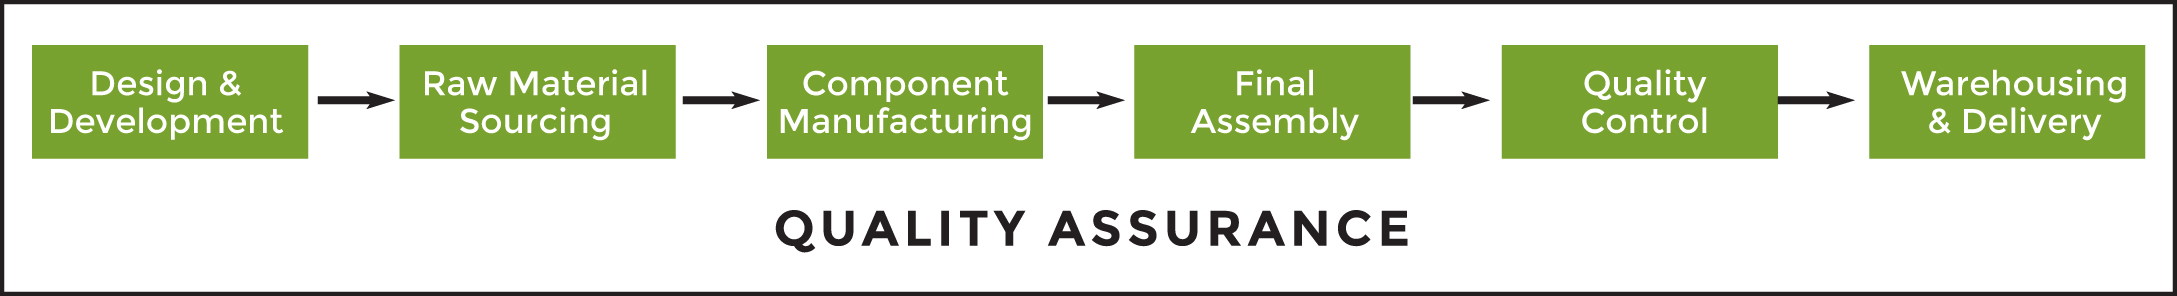 Quality Assurance Chart